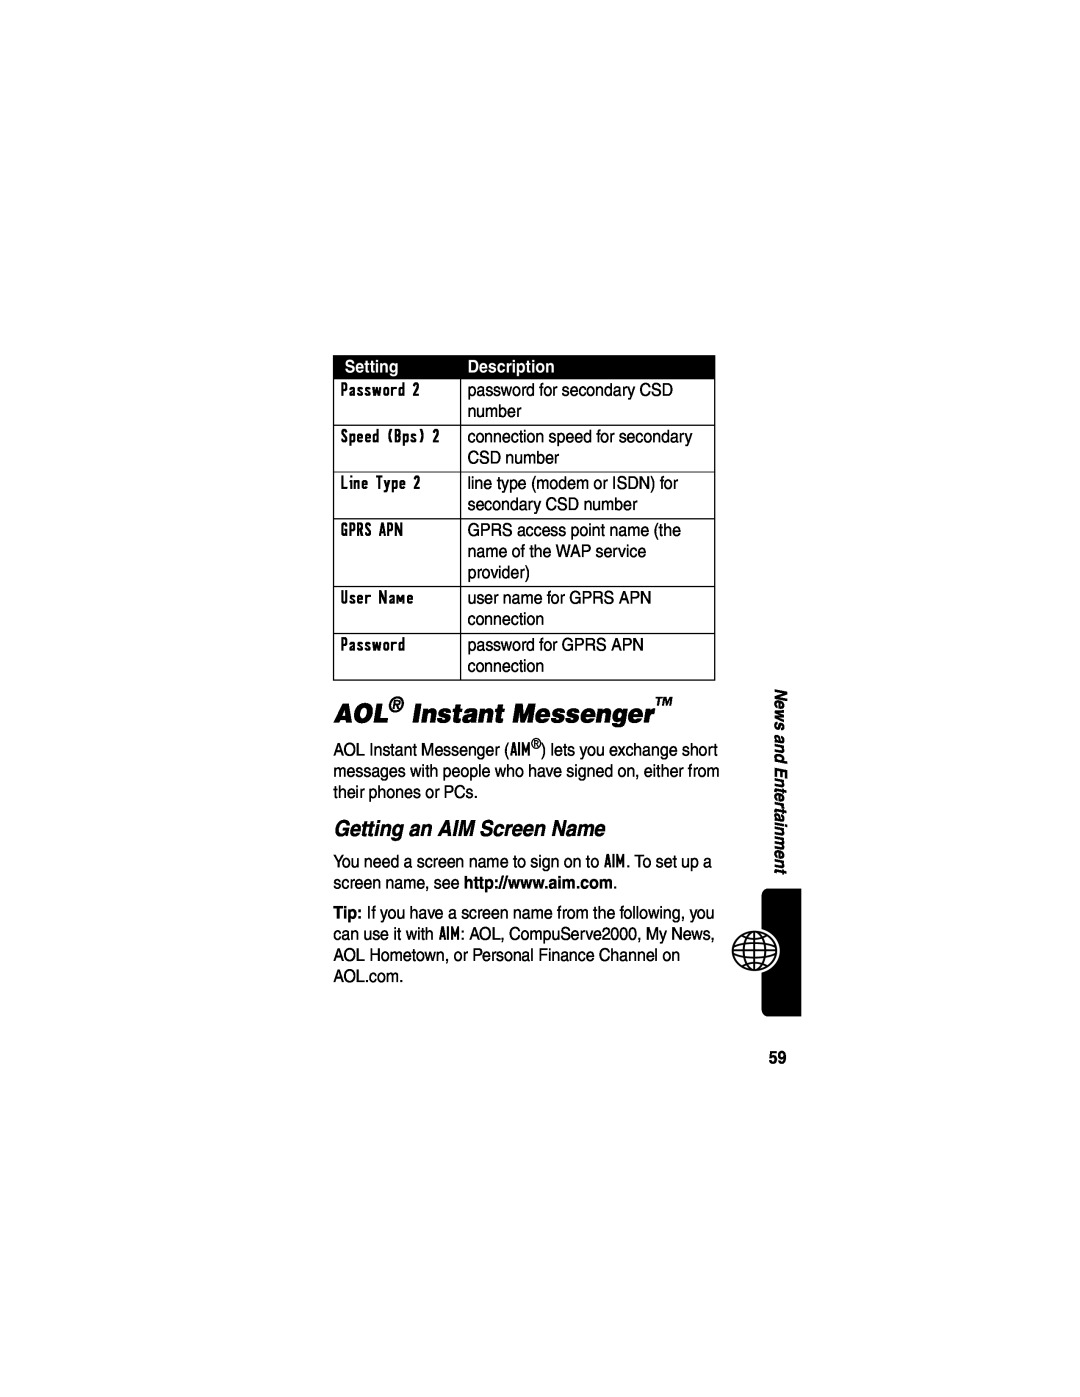 Motorola WIRELESS TELEPHONE manual AOL Instant Messenger, Getting an AIM Screen Name, Setting, Description 